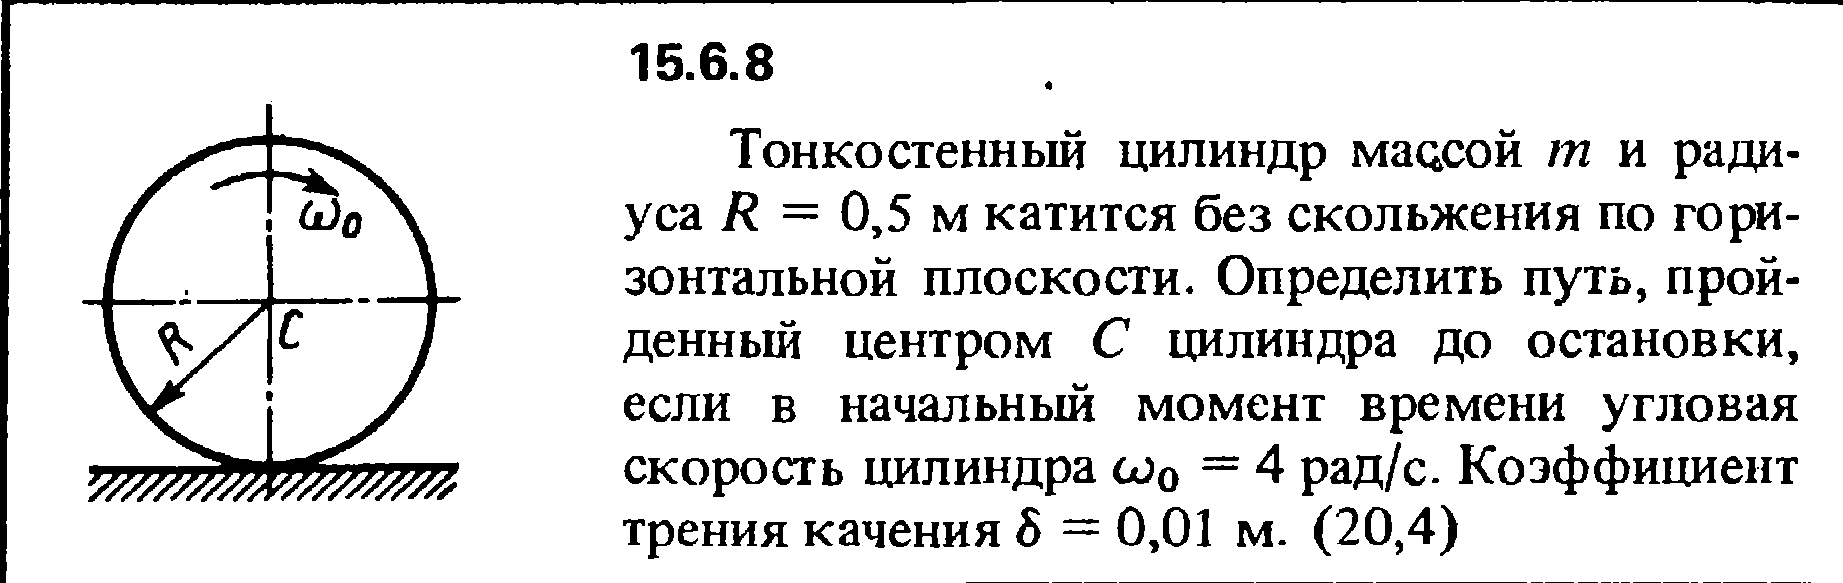 Решение задачи 15.6.8 из сборника Кепе О.Е. 1989 года